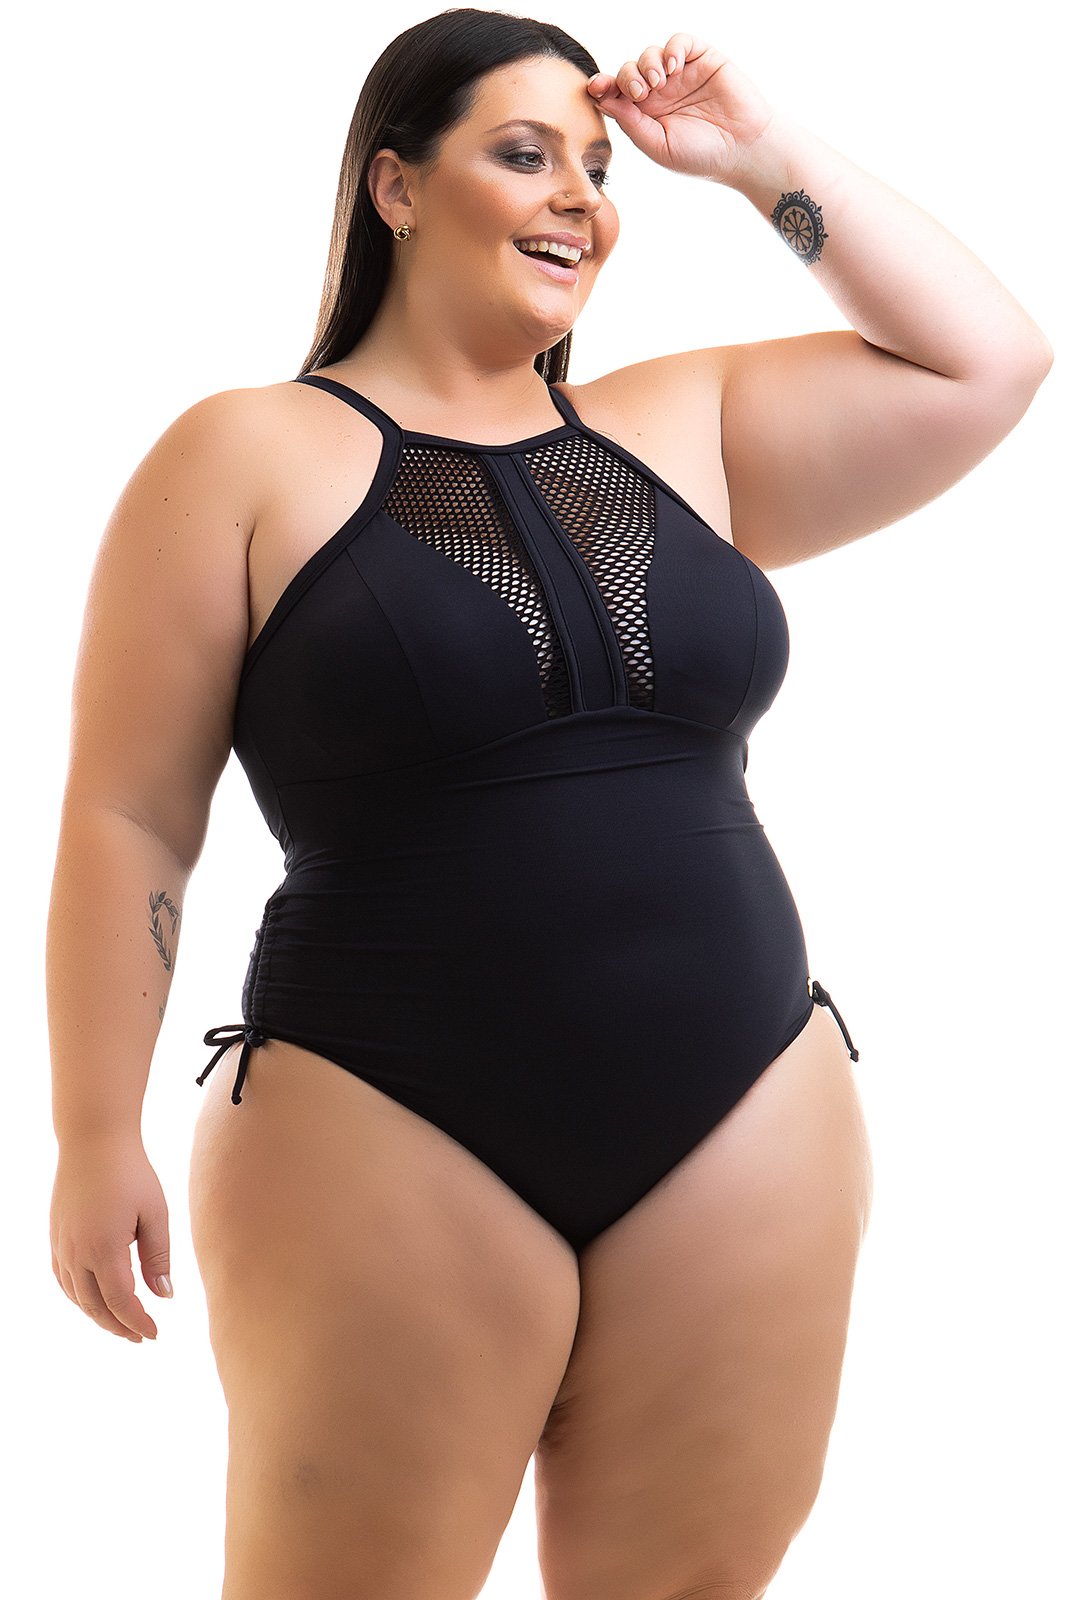 Plus Size Black High Neck Swimsuit With Openwork Swimsuit Cleya Preto Acquarosa